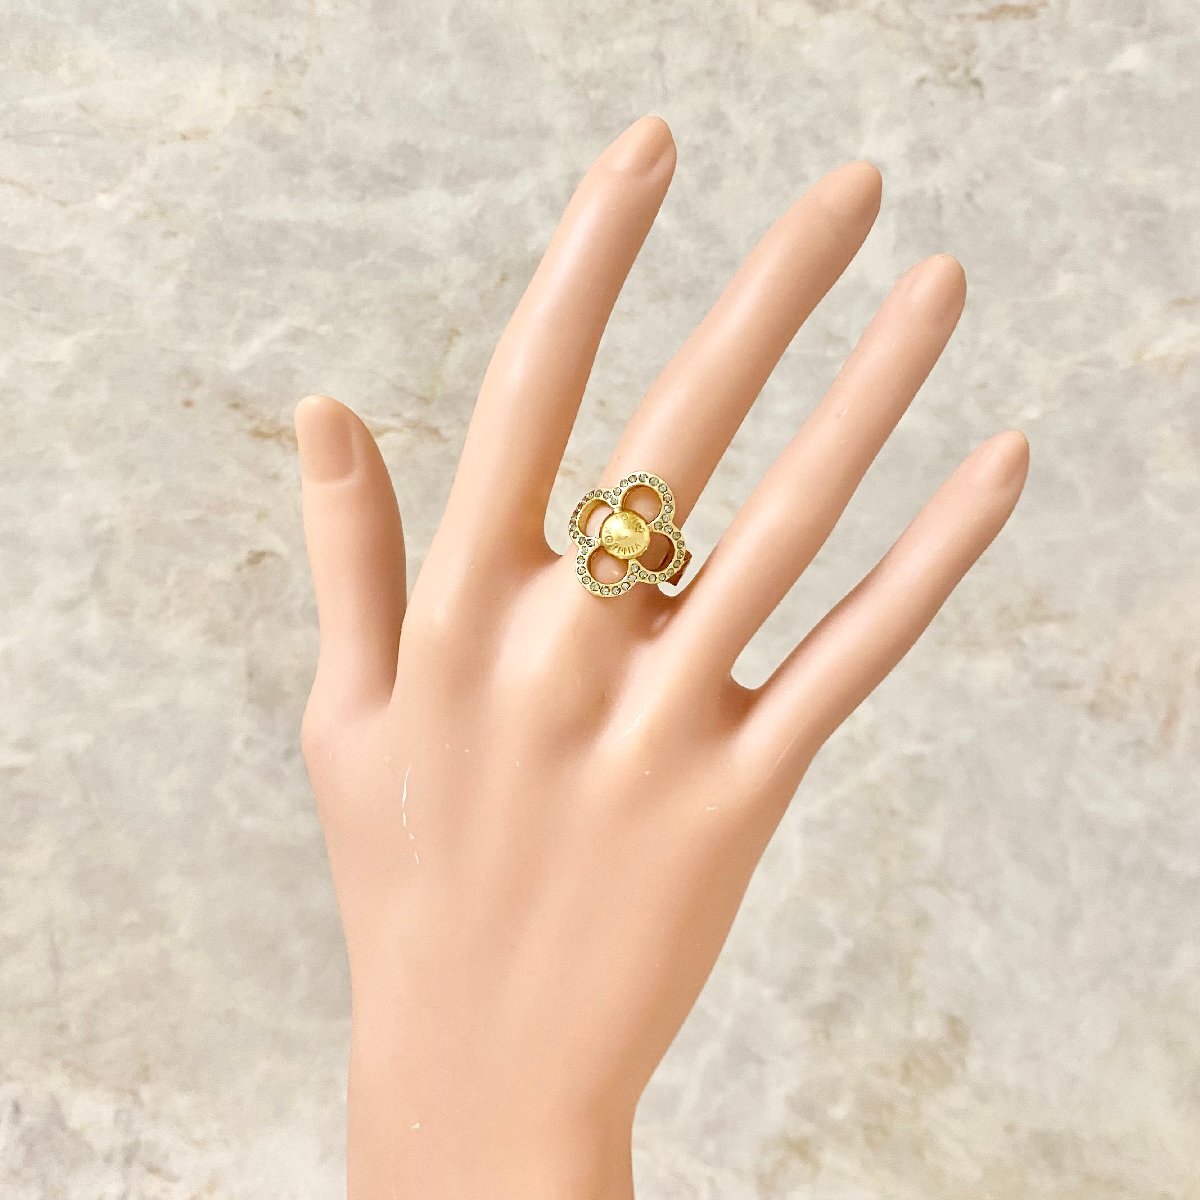  Vuitton кольцо энергия цветок кольцо M монограмма камень Gold цветок *